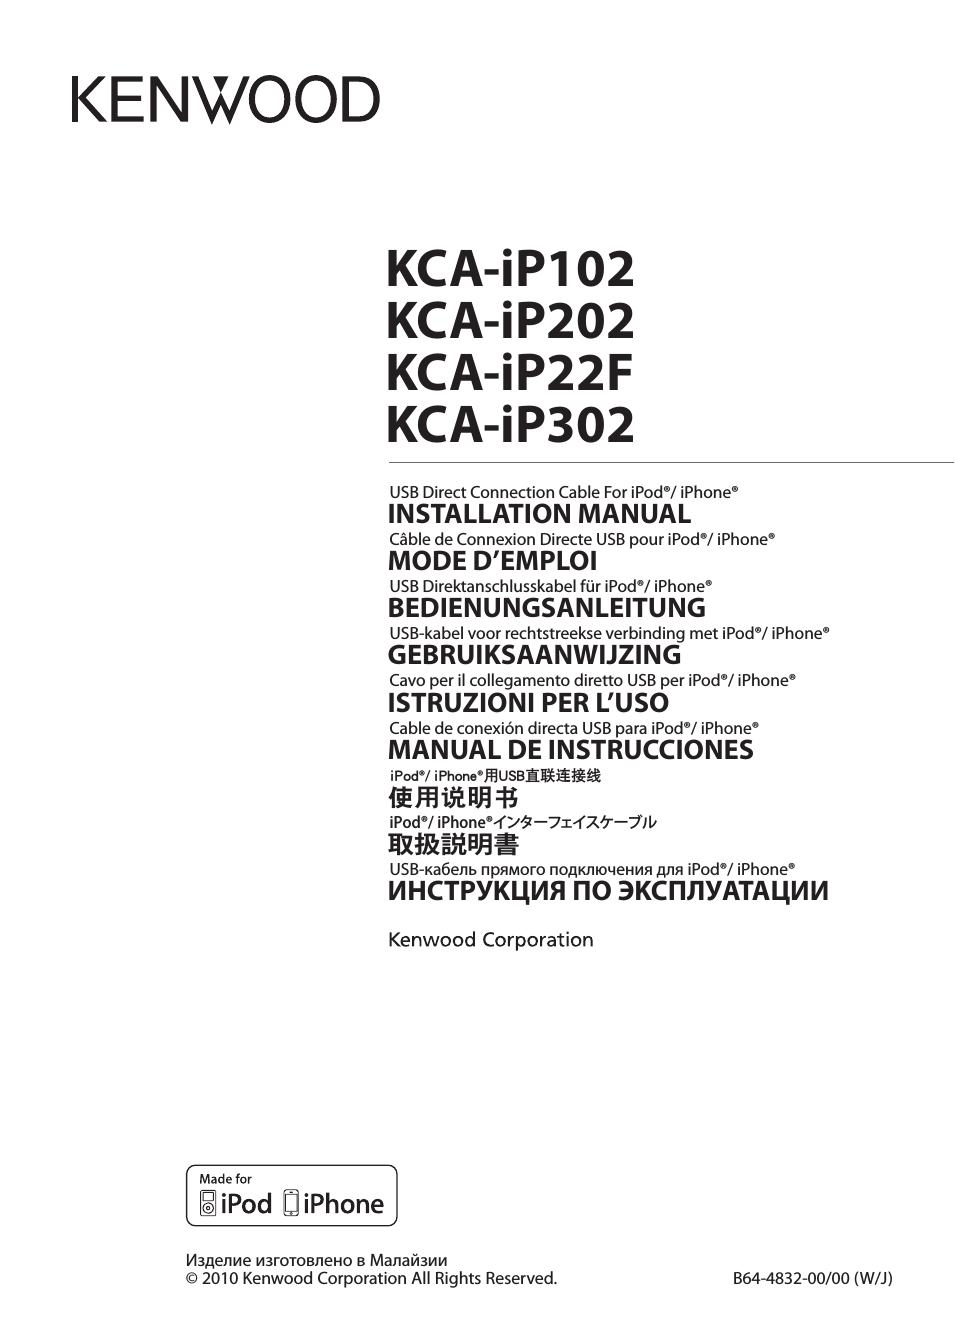 KCA-iP302